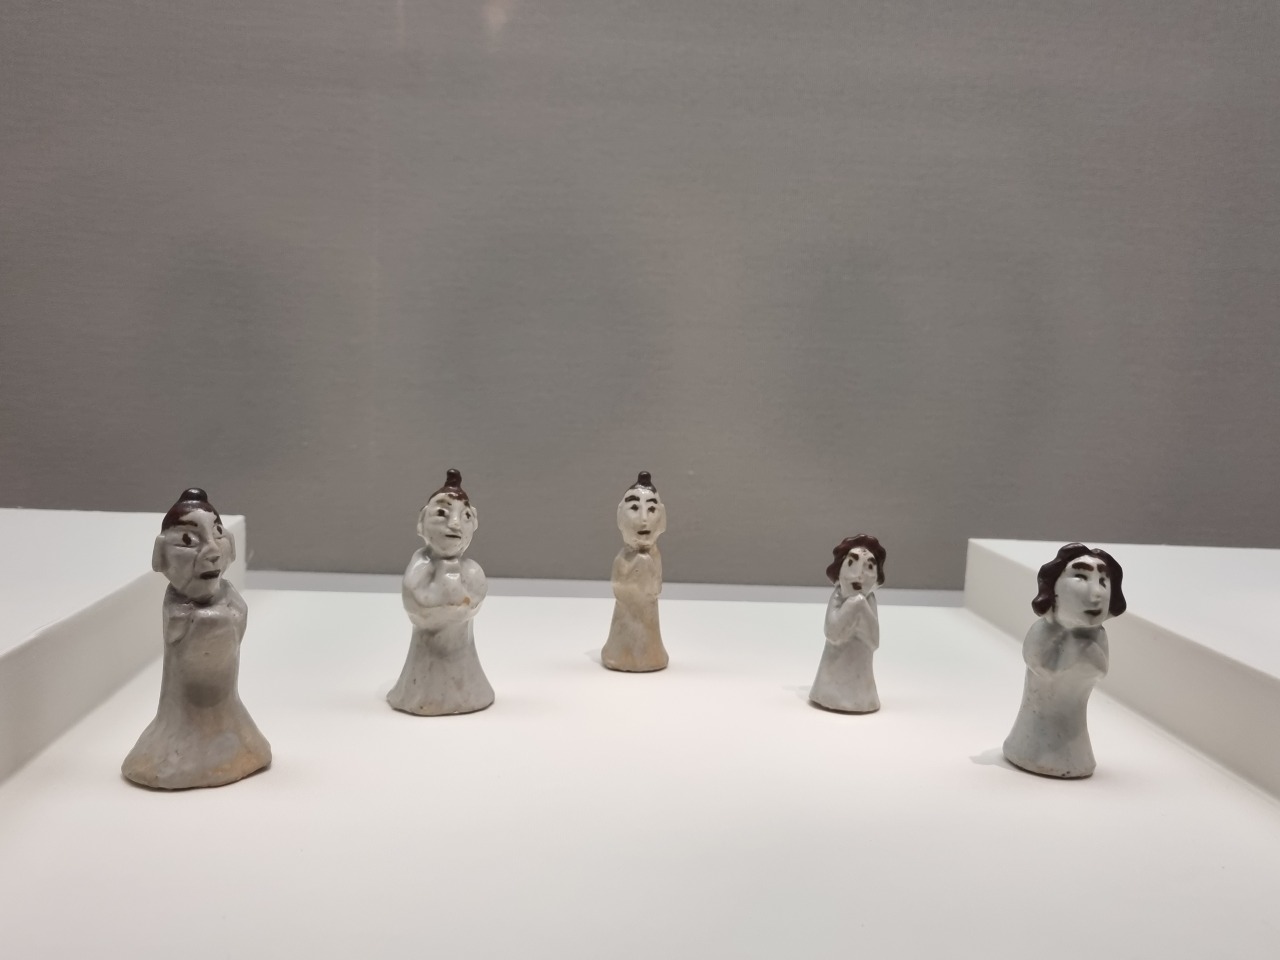 Donor Lee Hong-kun’s favorite ceramic artwork “Burial Figures” from the Joseon era is displayed at the Lee Hong-kun Gallery of the National Museum of Korea. (NMK)